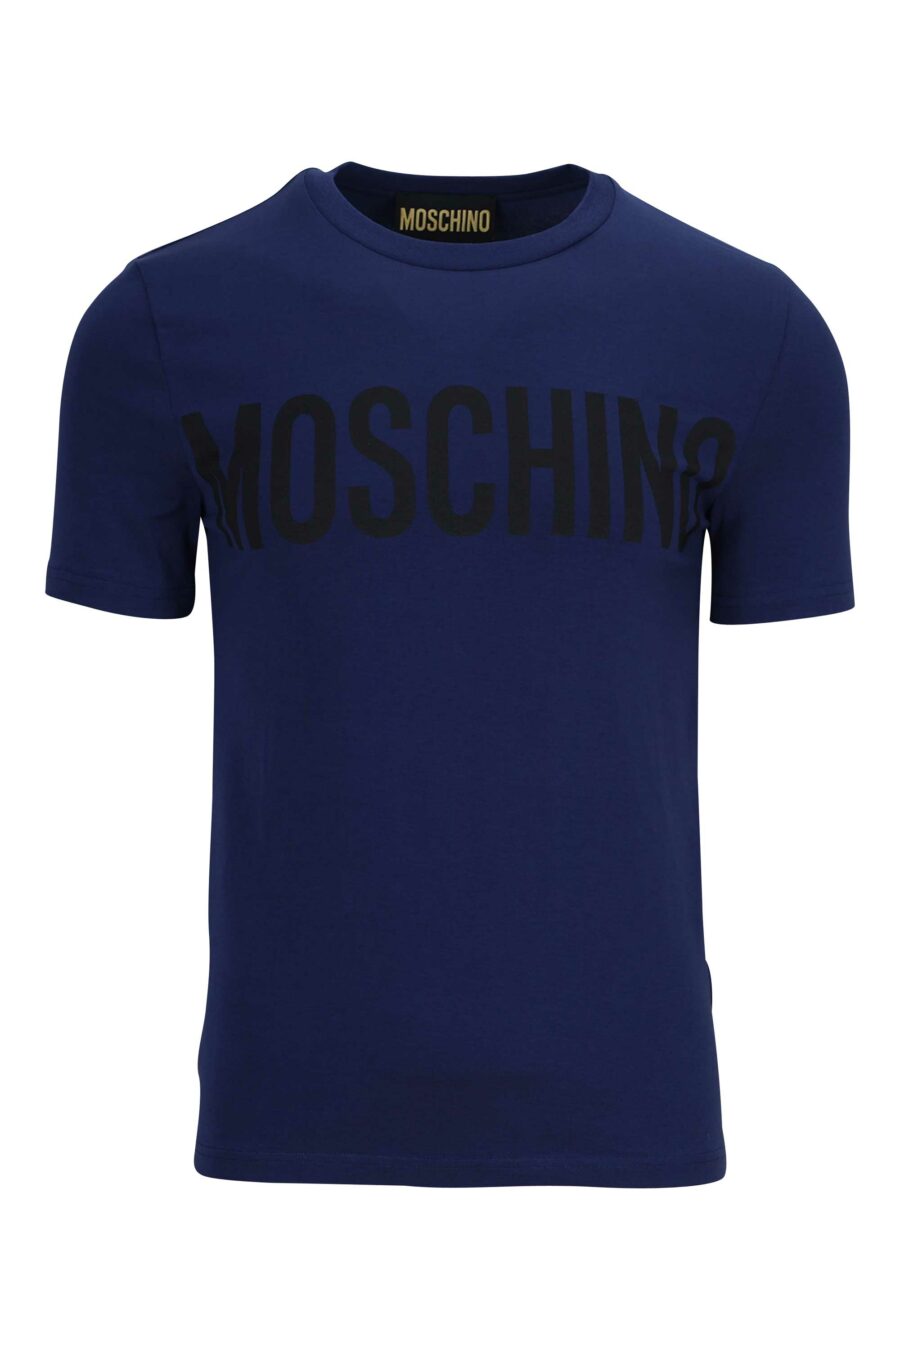 Camiseta azul marino con maxilogo negro - 889316649383